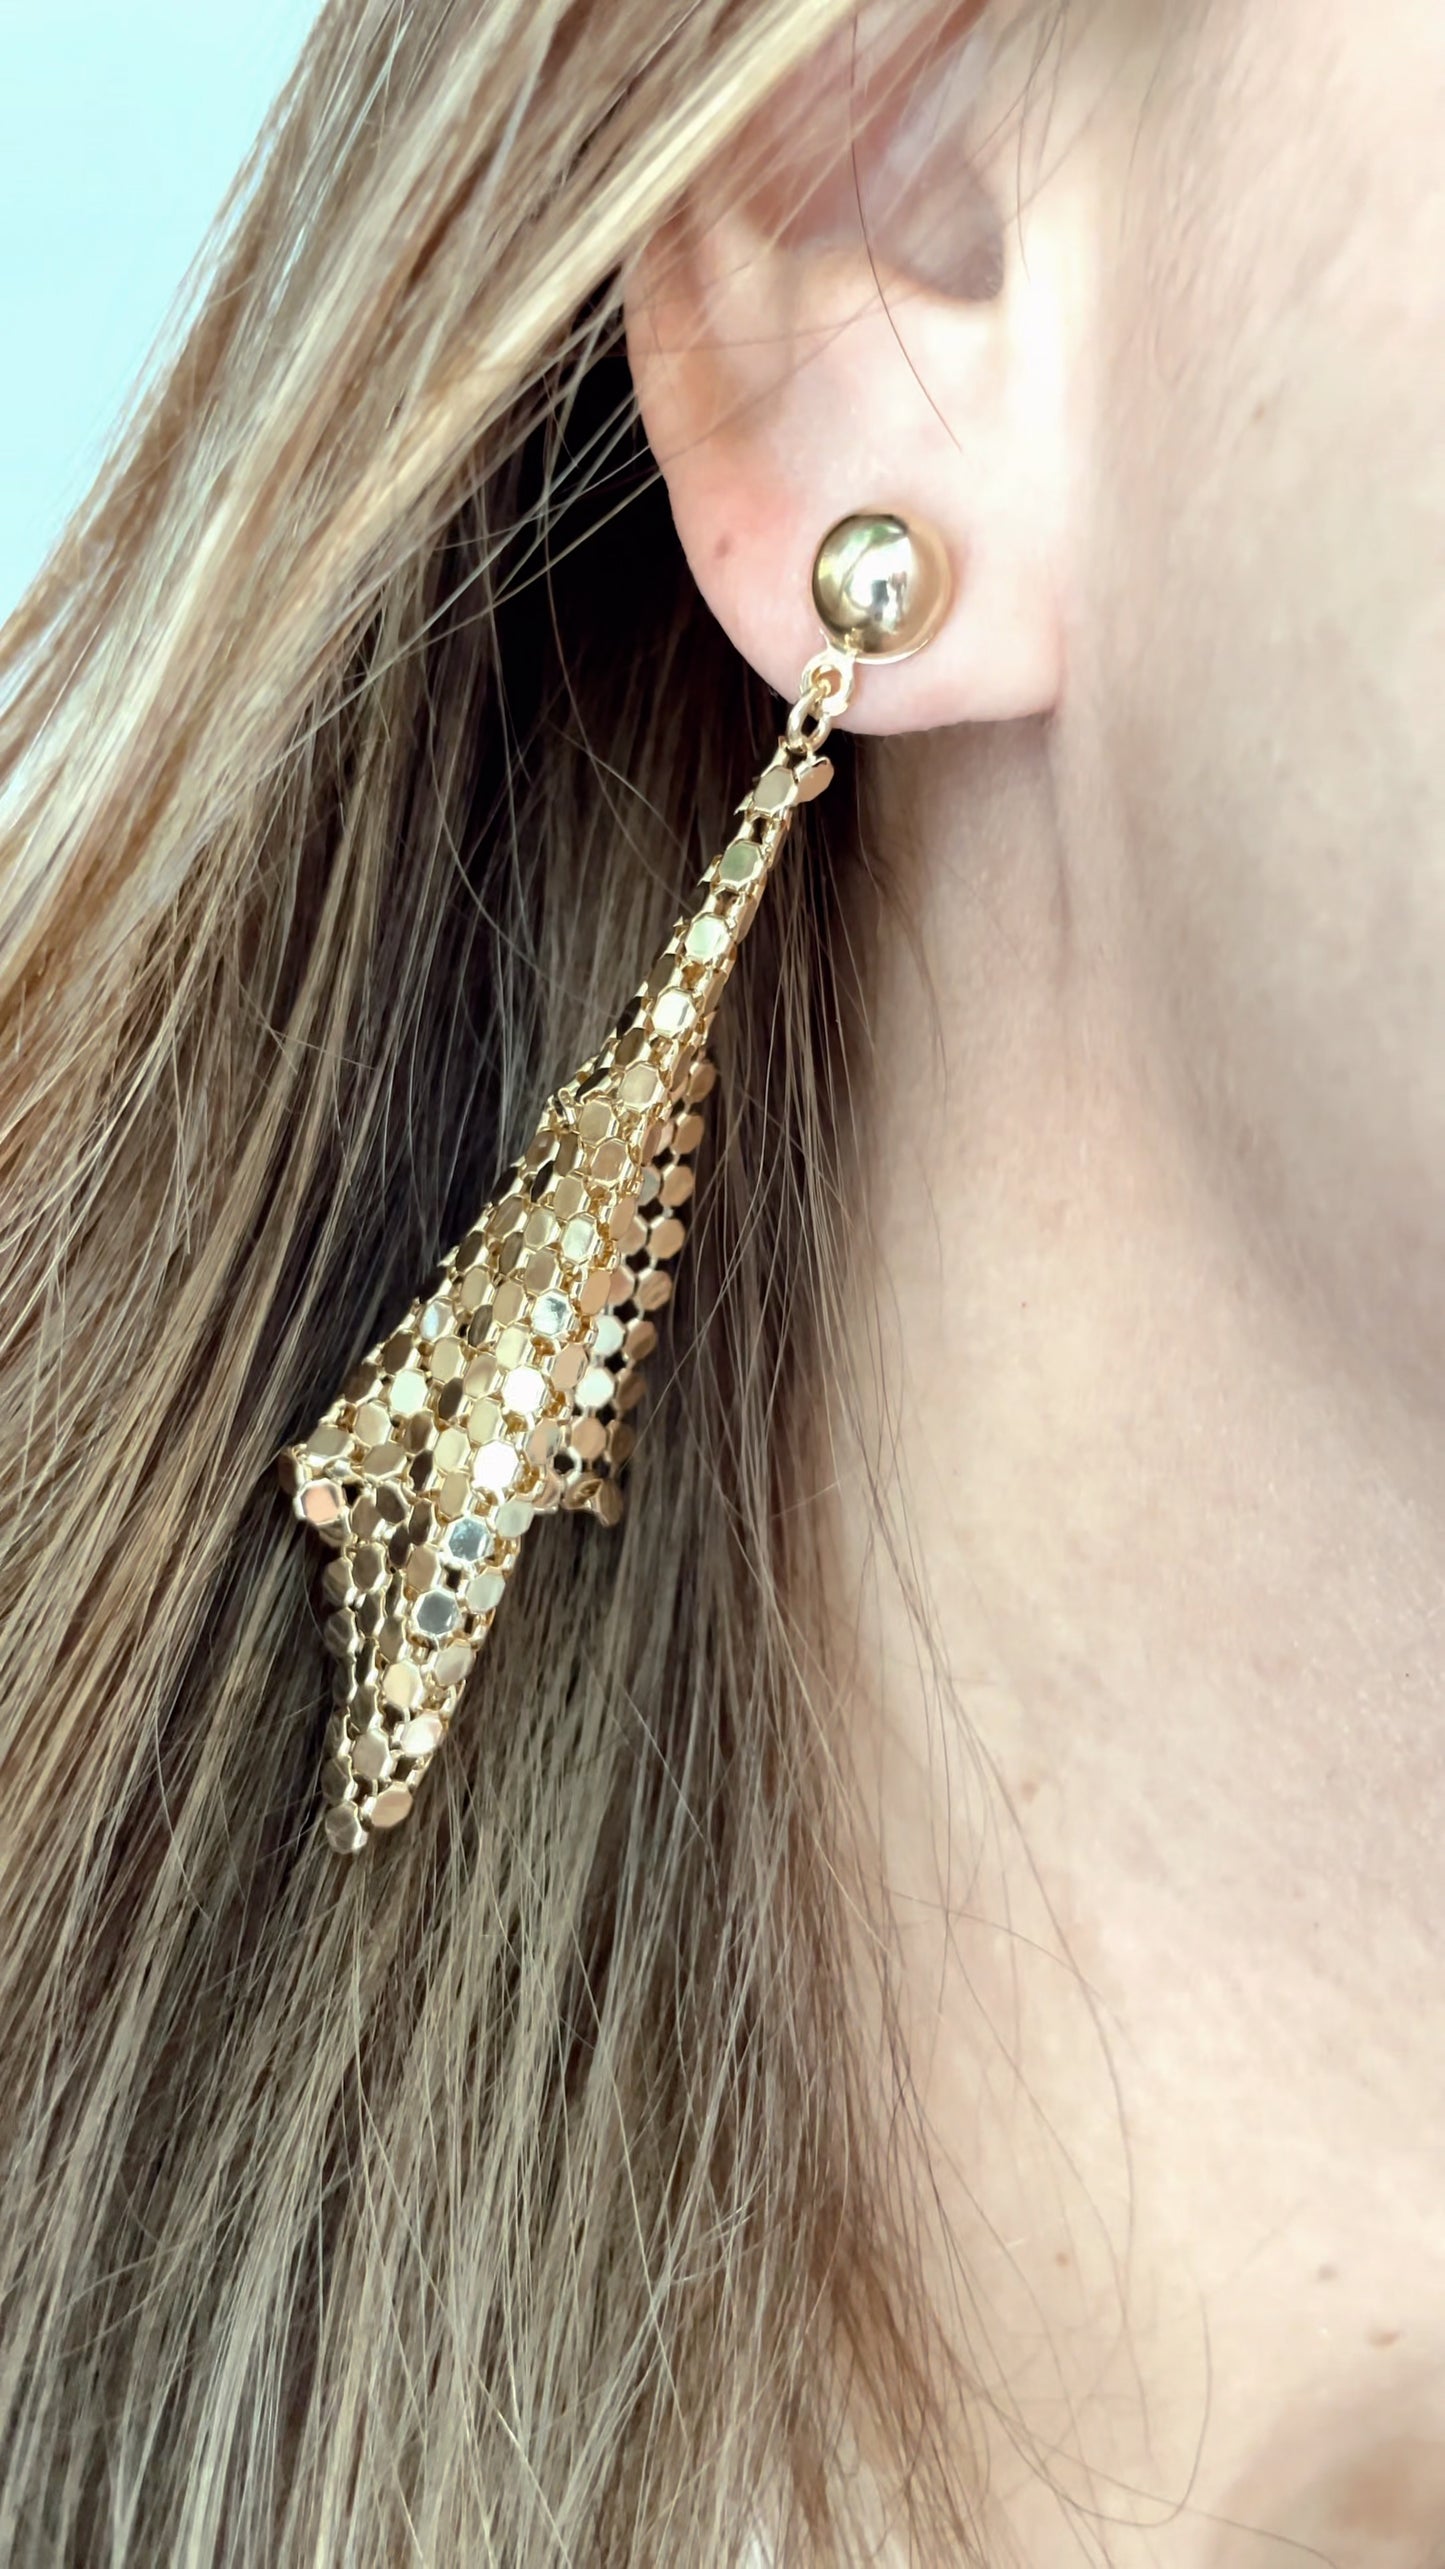 Pure gold earrings